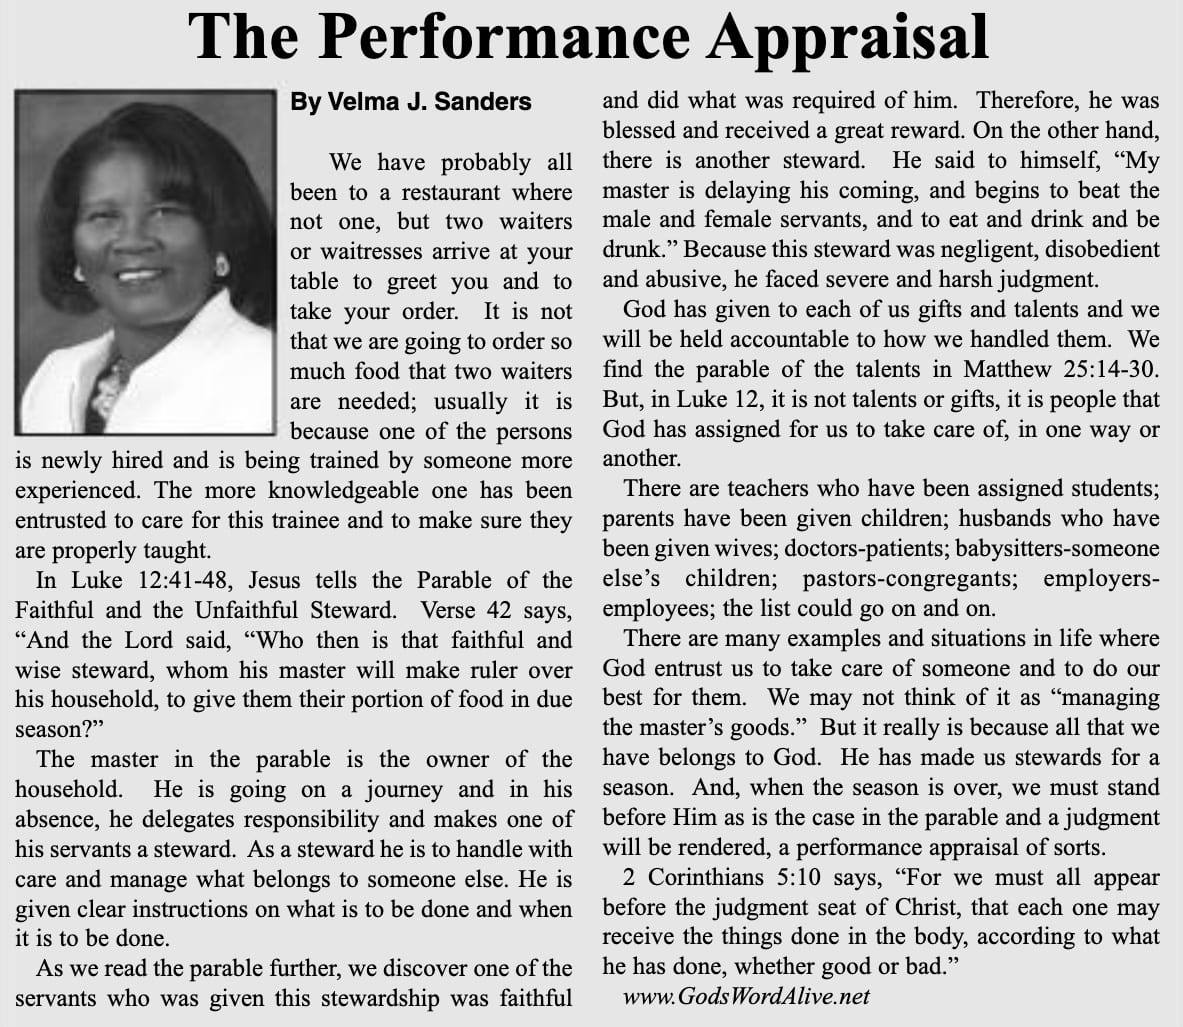 The Performance Appraisal